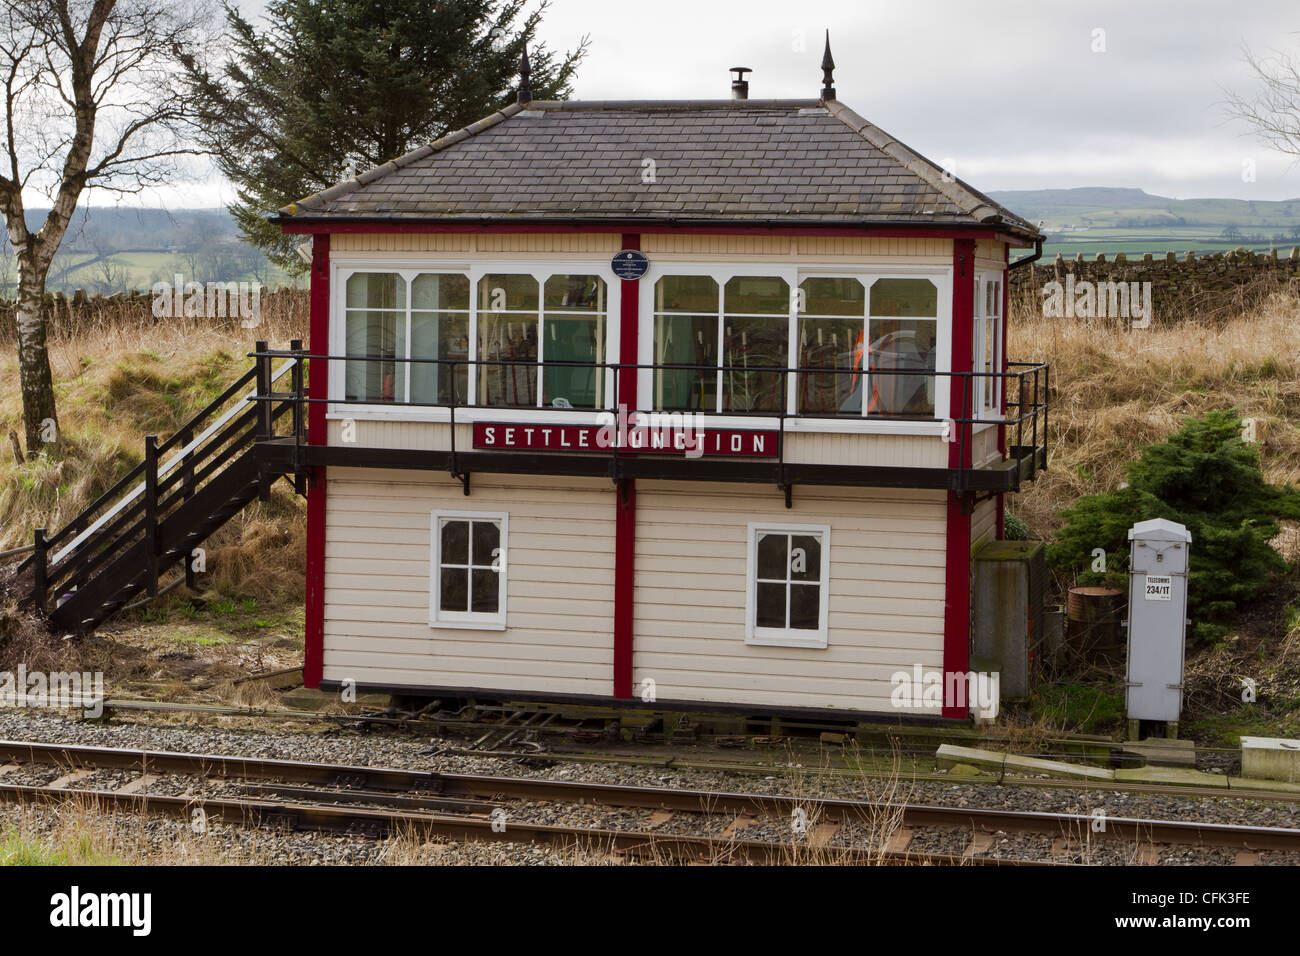 Settle Stellwerk - Settle Carlisle Eisenbahnlinie Stockfoto